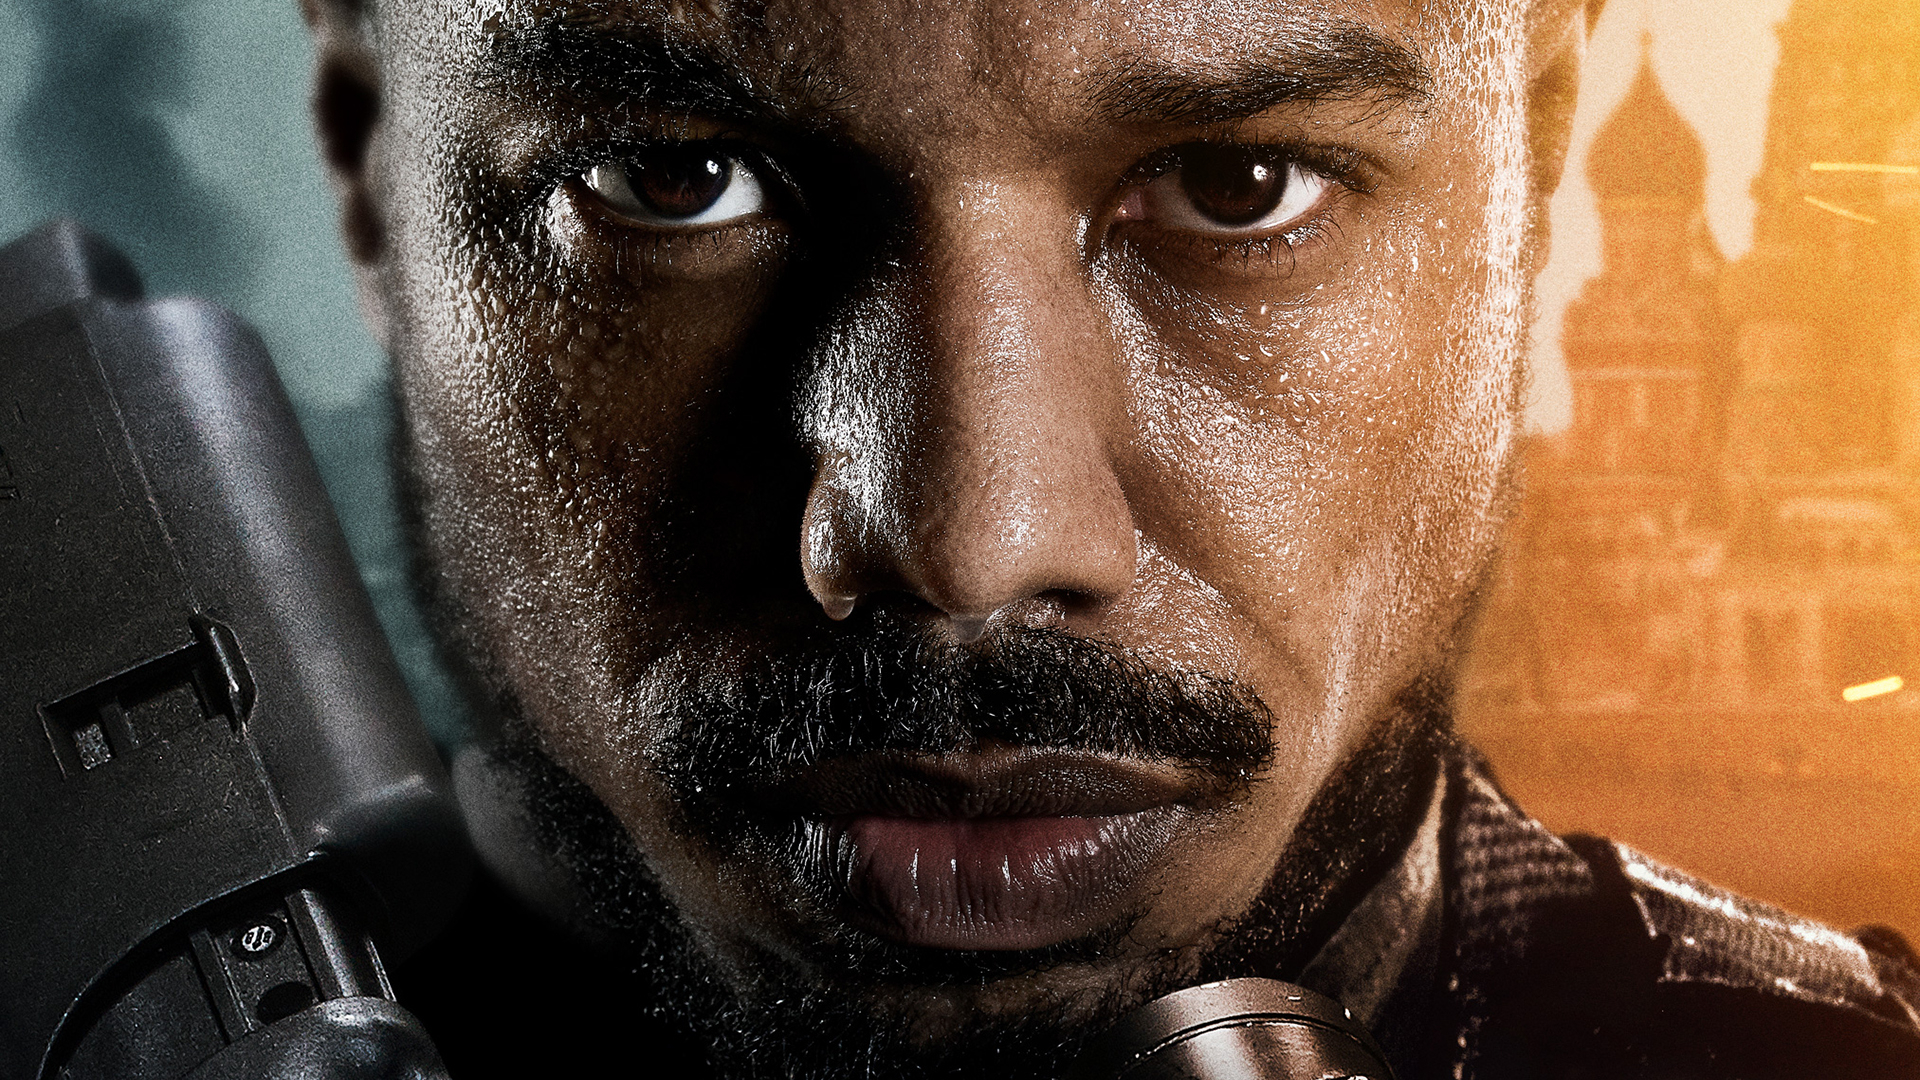 Michael B. Jordan on 'Black Panther: Wakanda Forever' and 'Creed 3